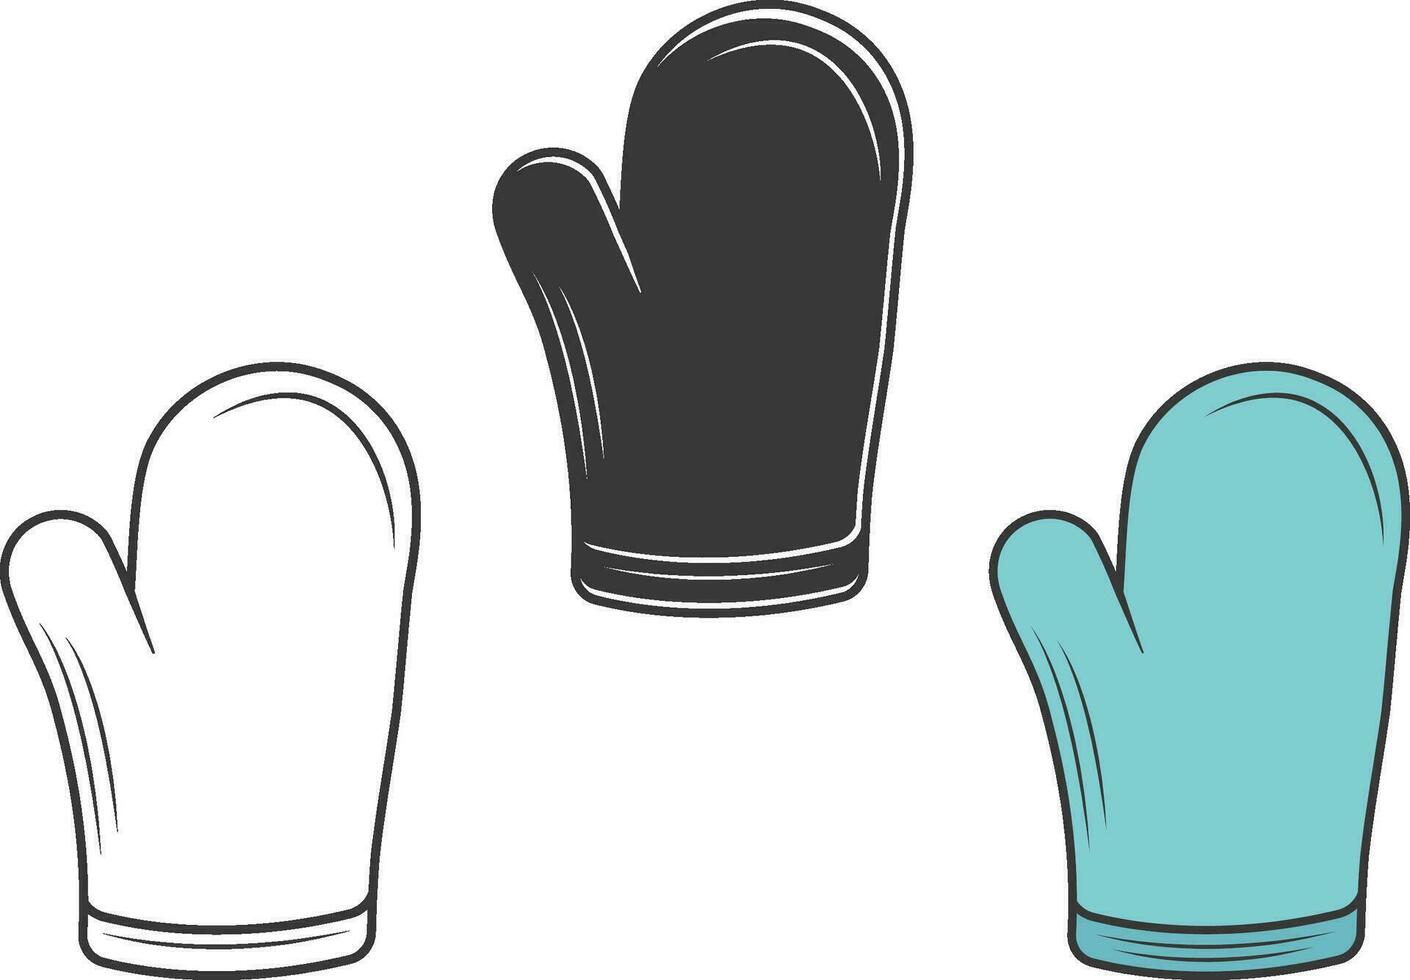 Kitchen Gloves Vector, Kitchen Gloves illustration, Kitchen Gloves Silhouette, Restaurant Equipment, Cooking Equipment, Clip Art, Utensil Silhouette vector